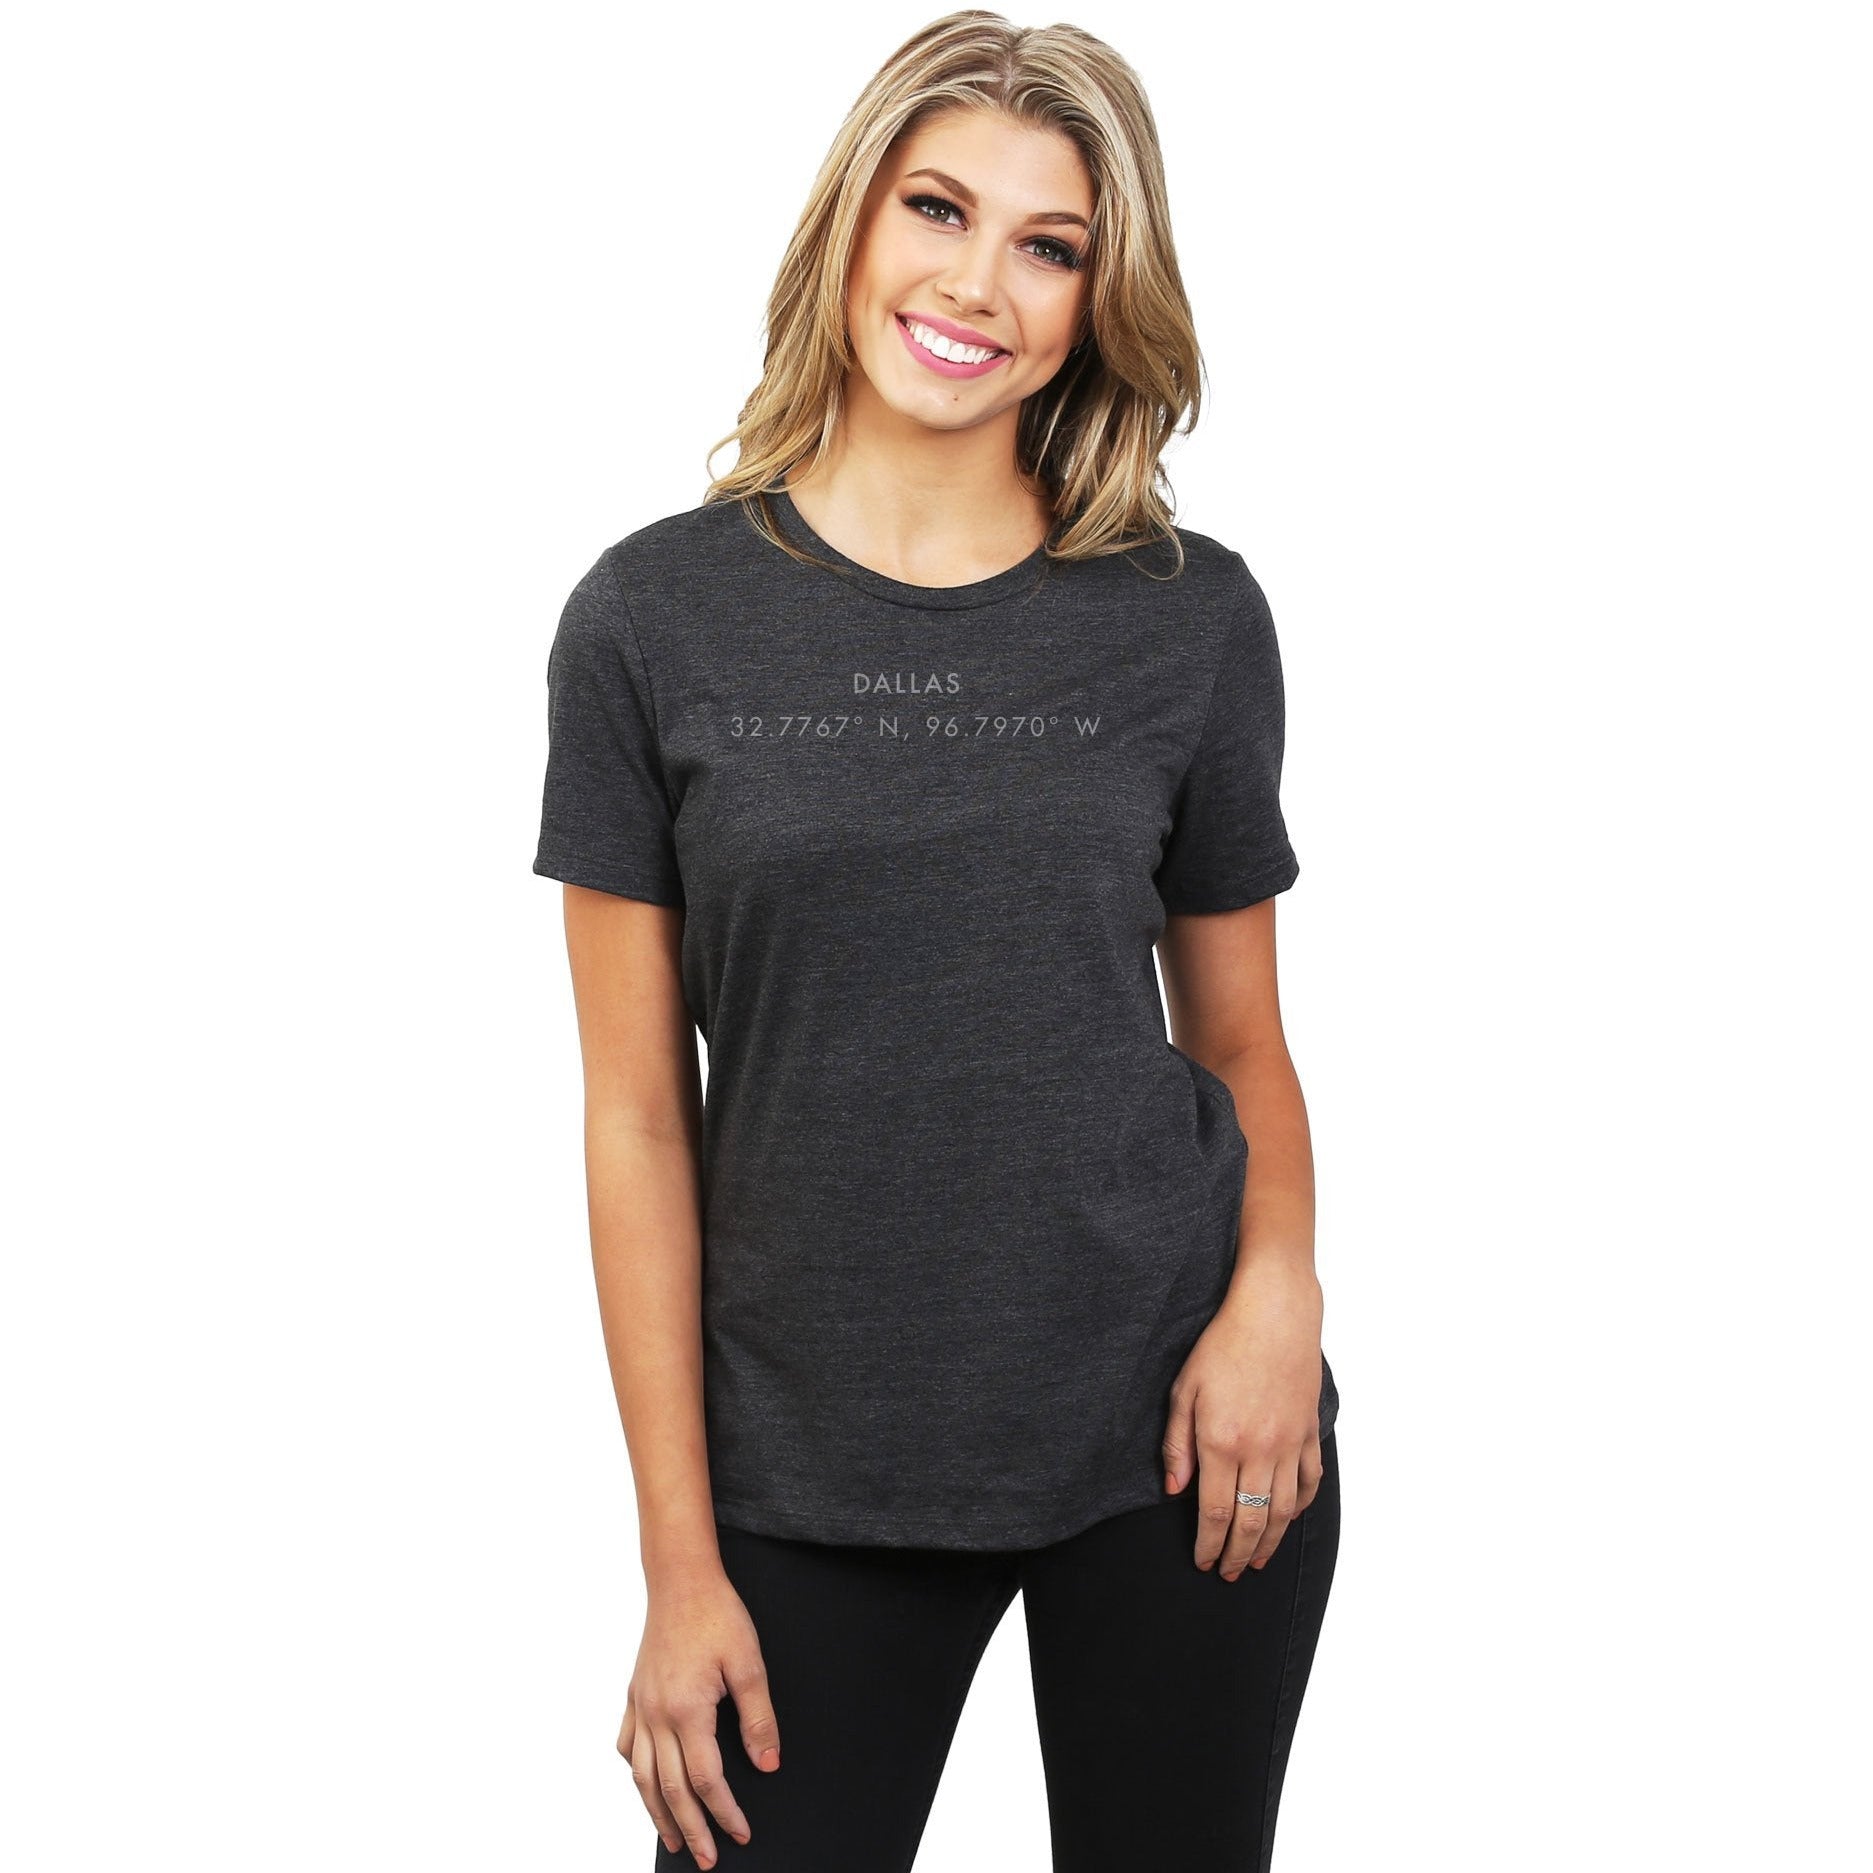 Dallas Texas Coordinates Women's Relaxed Crewneck T-Shirt Top Tee Charcoal Model
